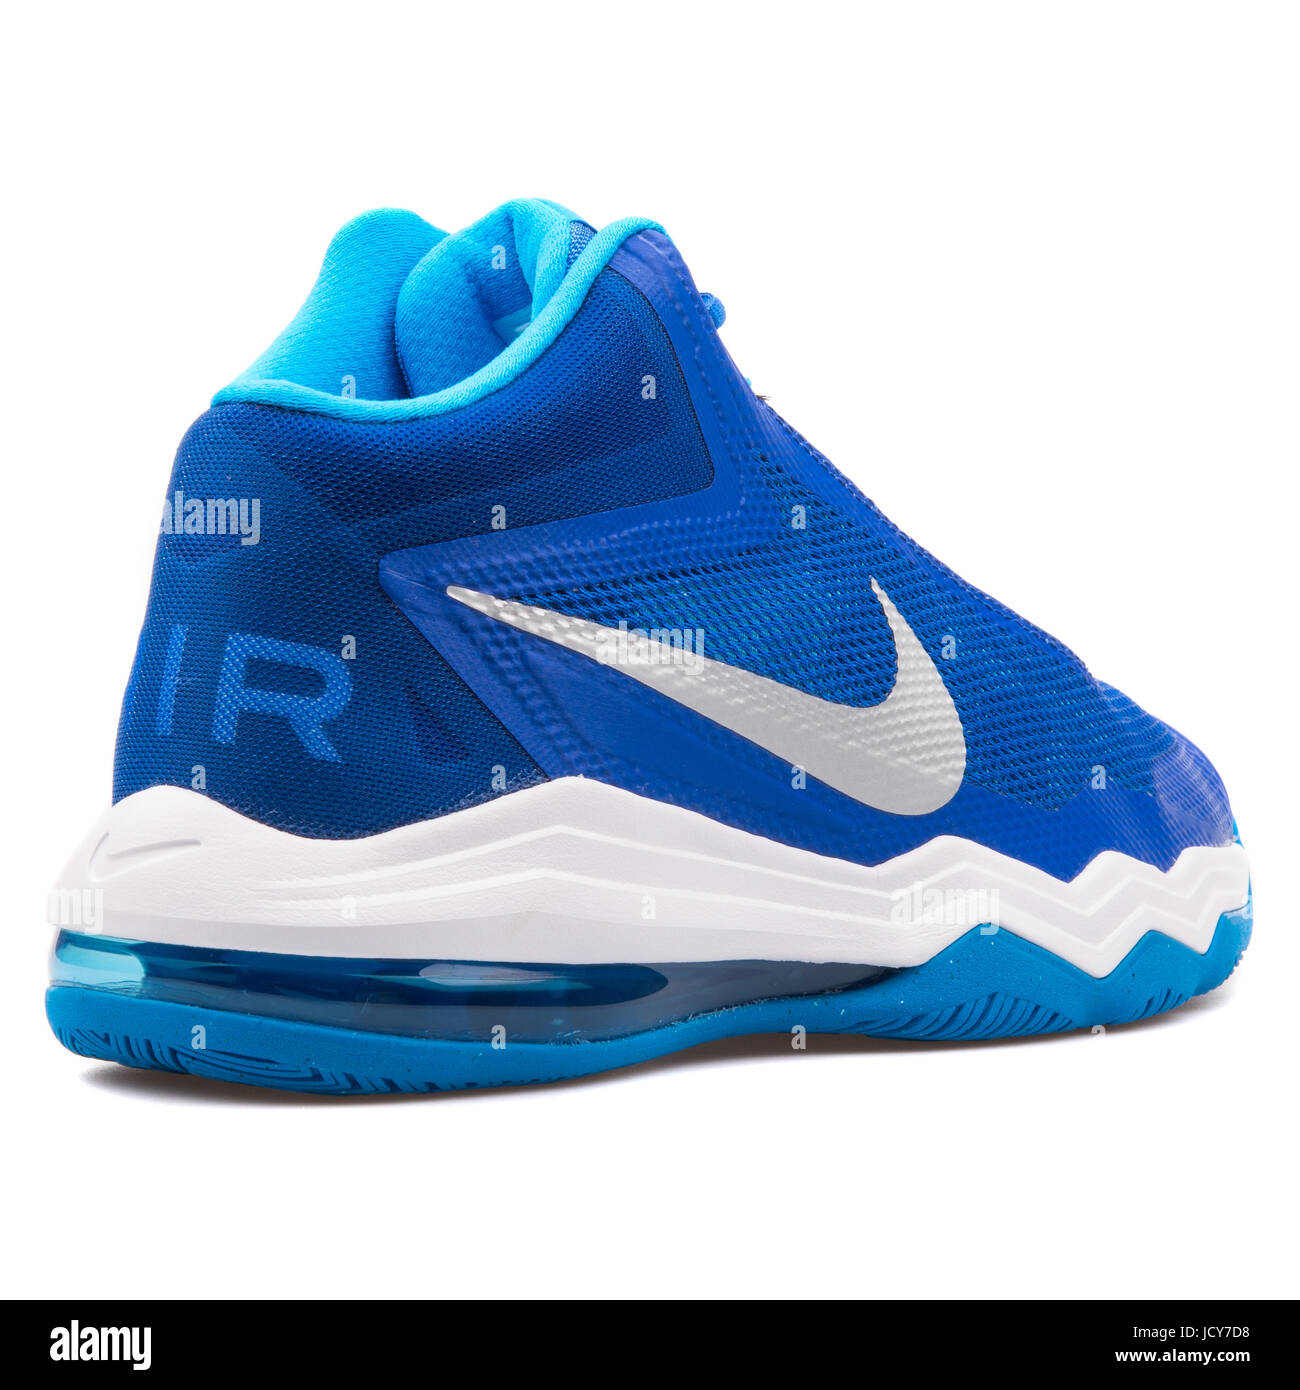 Nike Air Max Audacity TB blau und weiß Unisex Basketball-Schuhe -  749166-403 Stockfotografie - Alamy